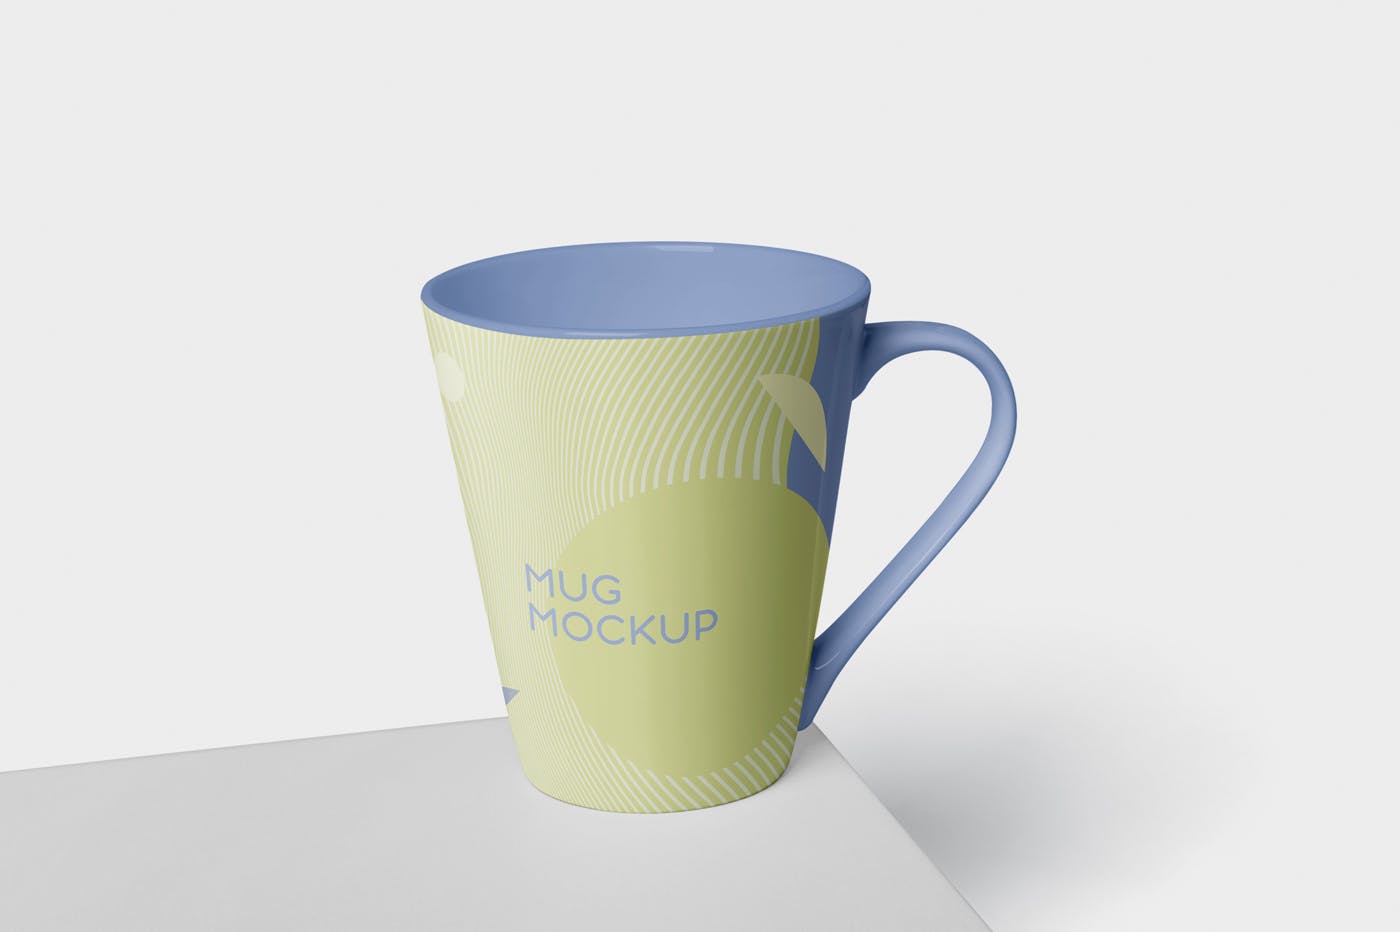 锥形马克杯图案设计第一素材精选 Mug Mockup – Cone Shaped插图(2)